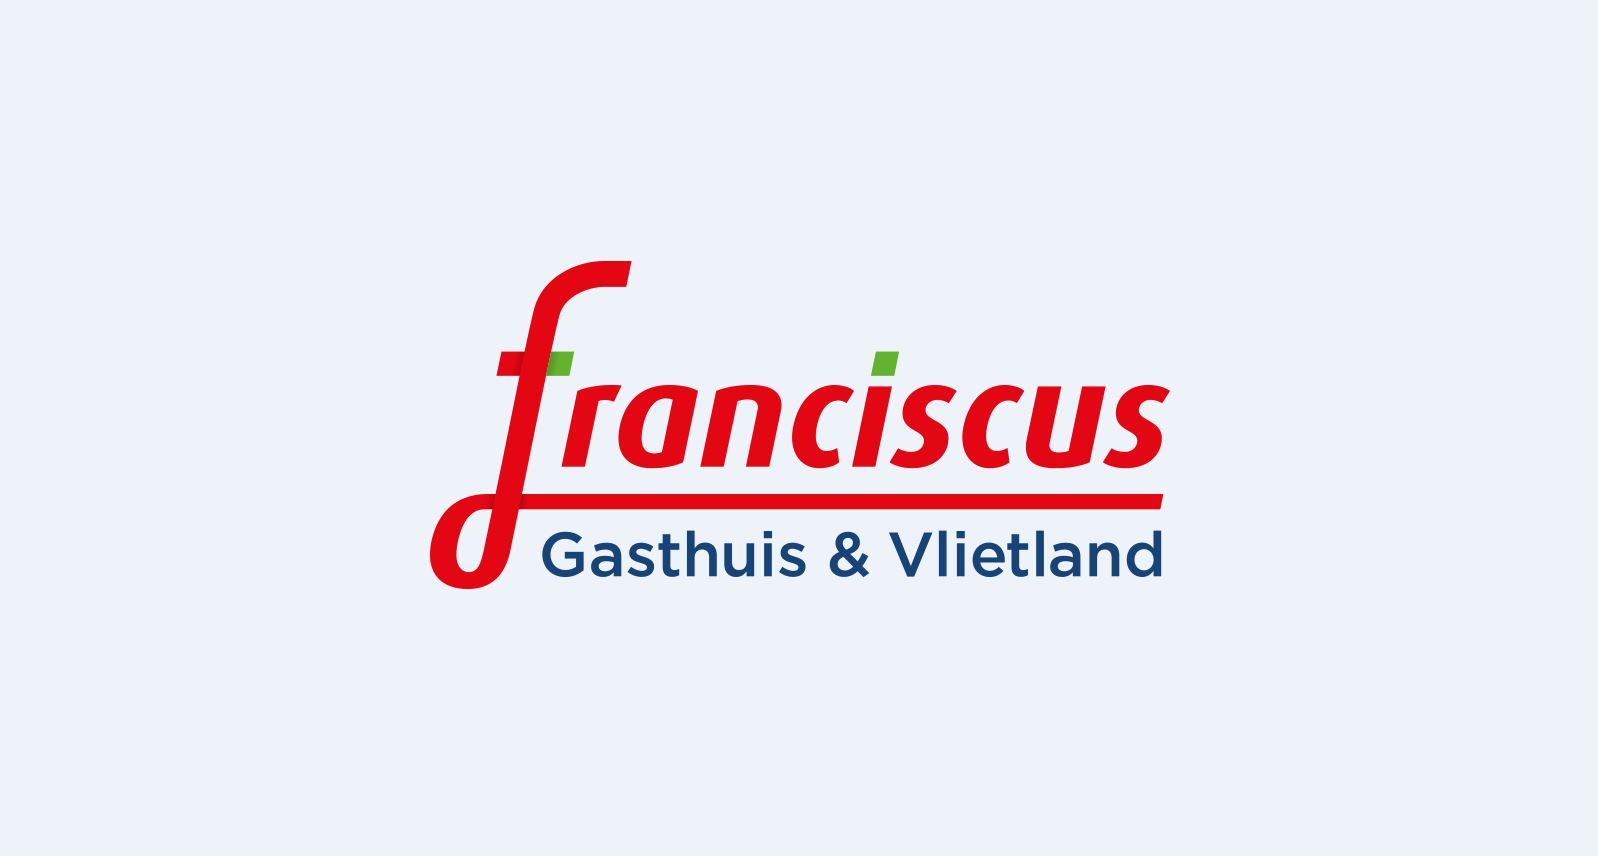 Franciscus Gasthuis & Vlietland